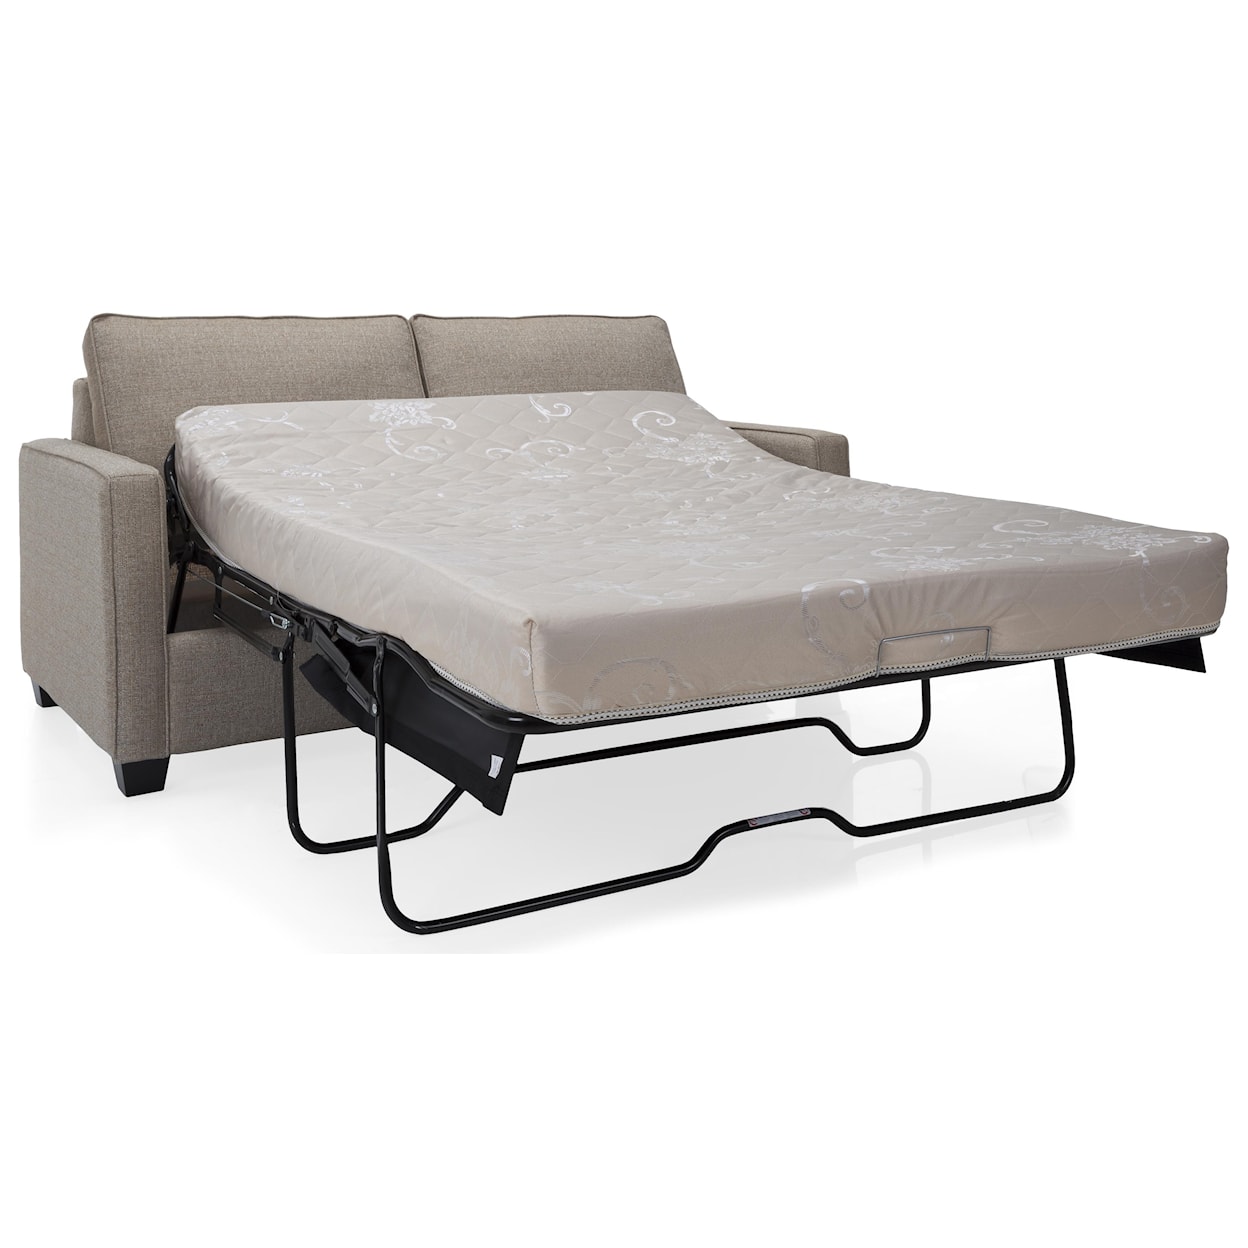 Taelor Designs Lara Double Sleeper Sofa Bed